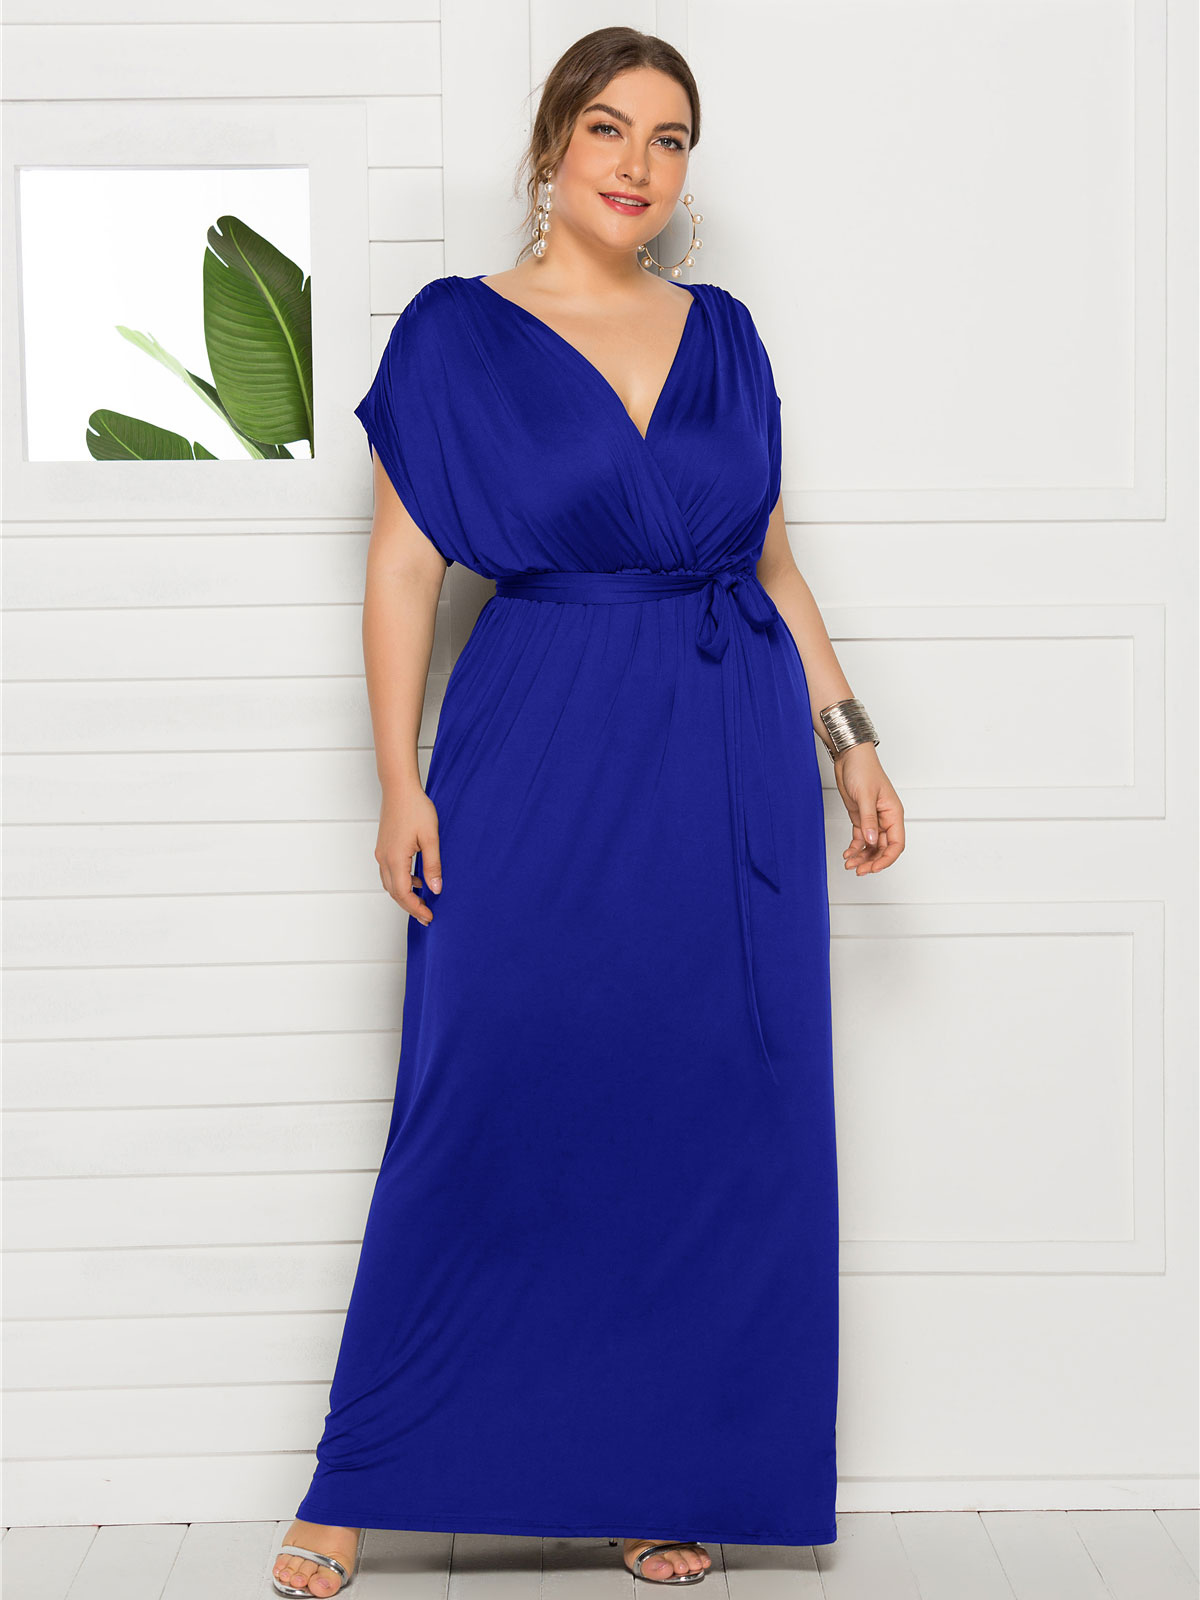 Size Maxi Dress For Women Royal Blue ...